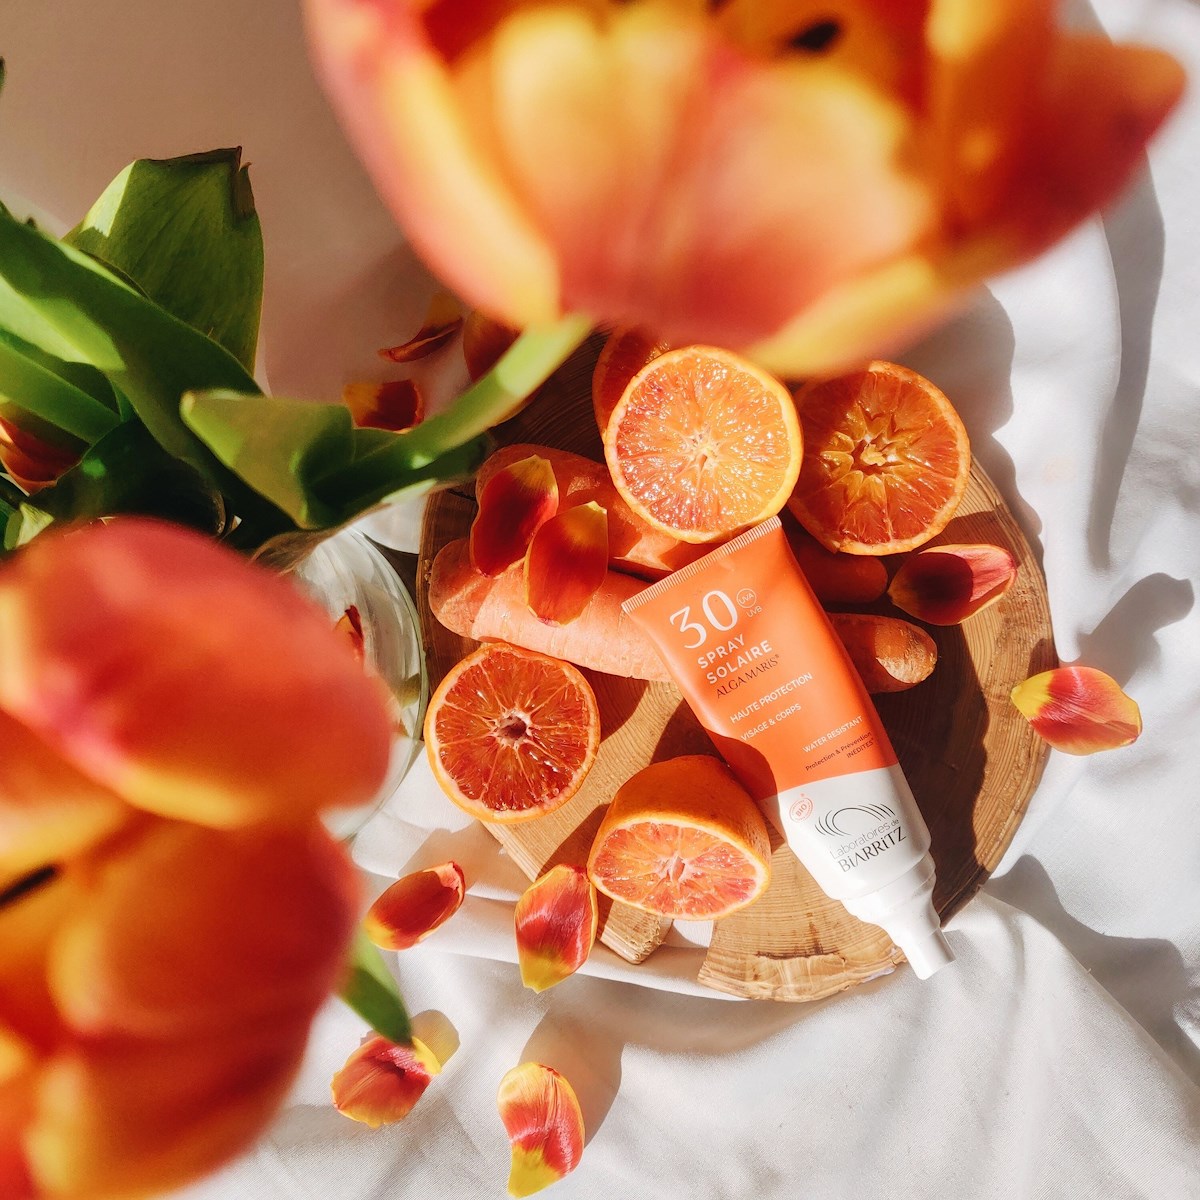 Flatlay with tulips, oranges, carrots and Alga Maris sunscreen